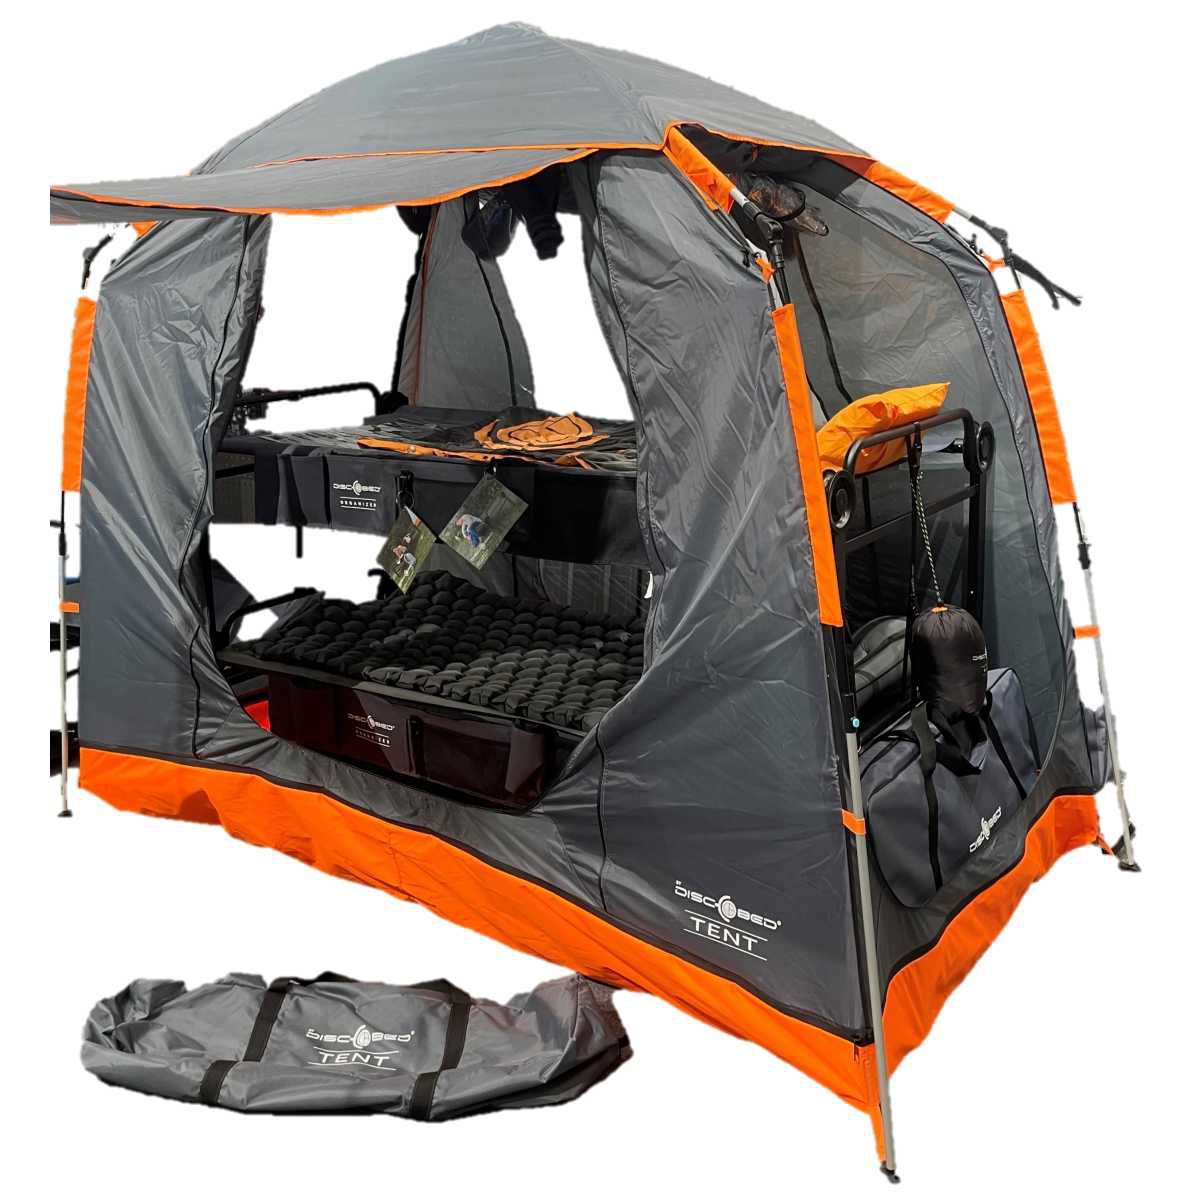 Disc-O-Bed TENT Zelt mit Sonnenvordach grau-orange - 70001